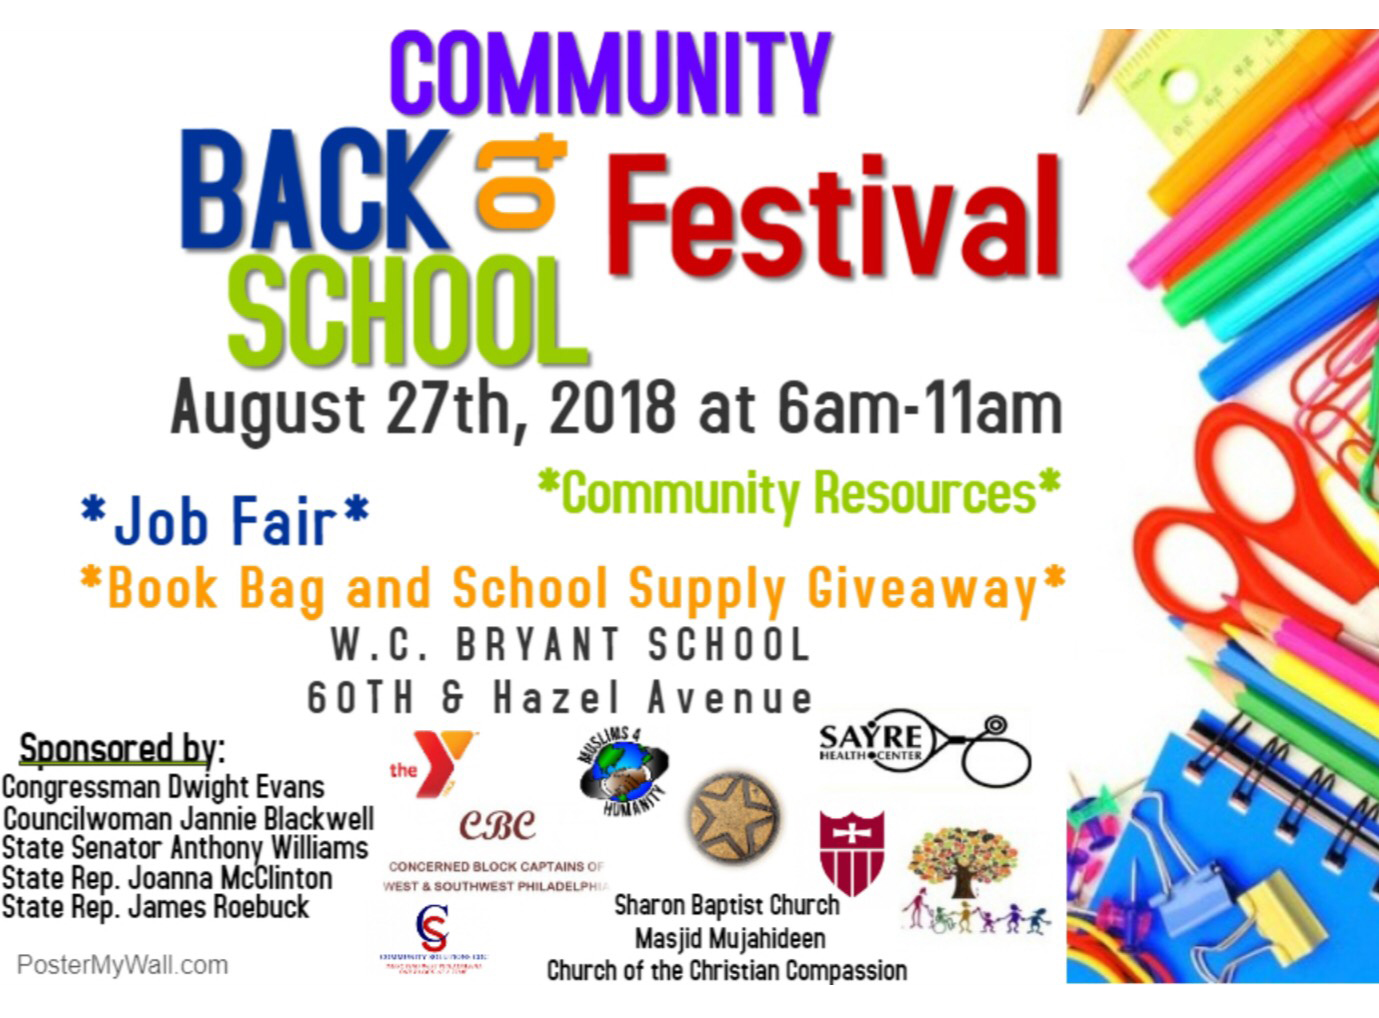 Community Back to School Festival